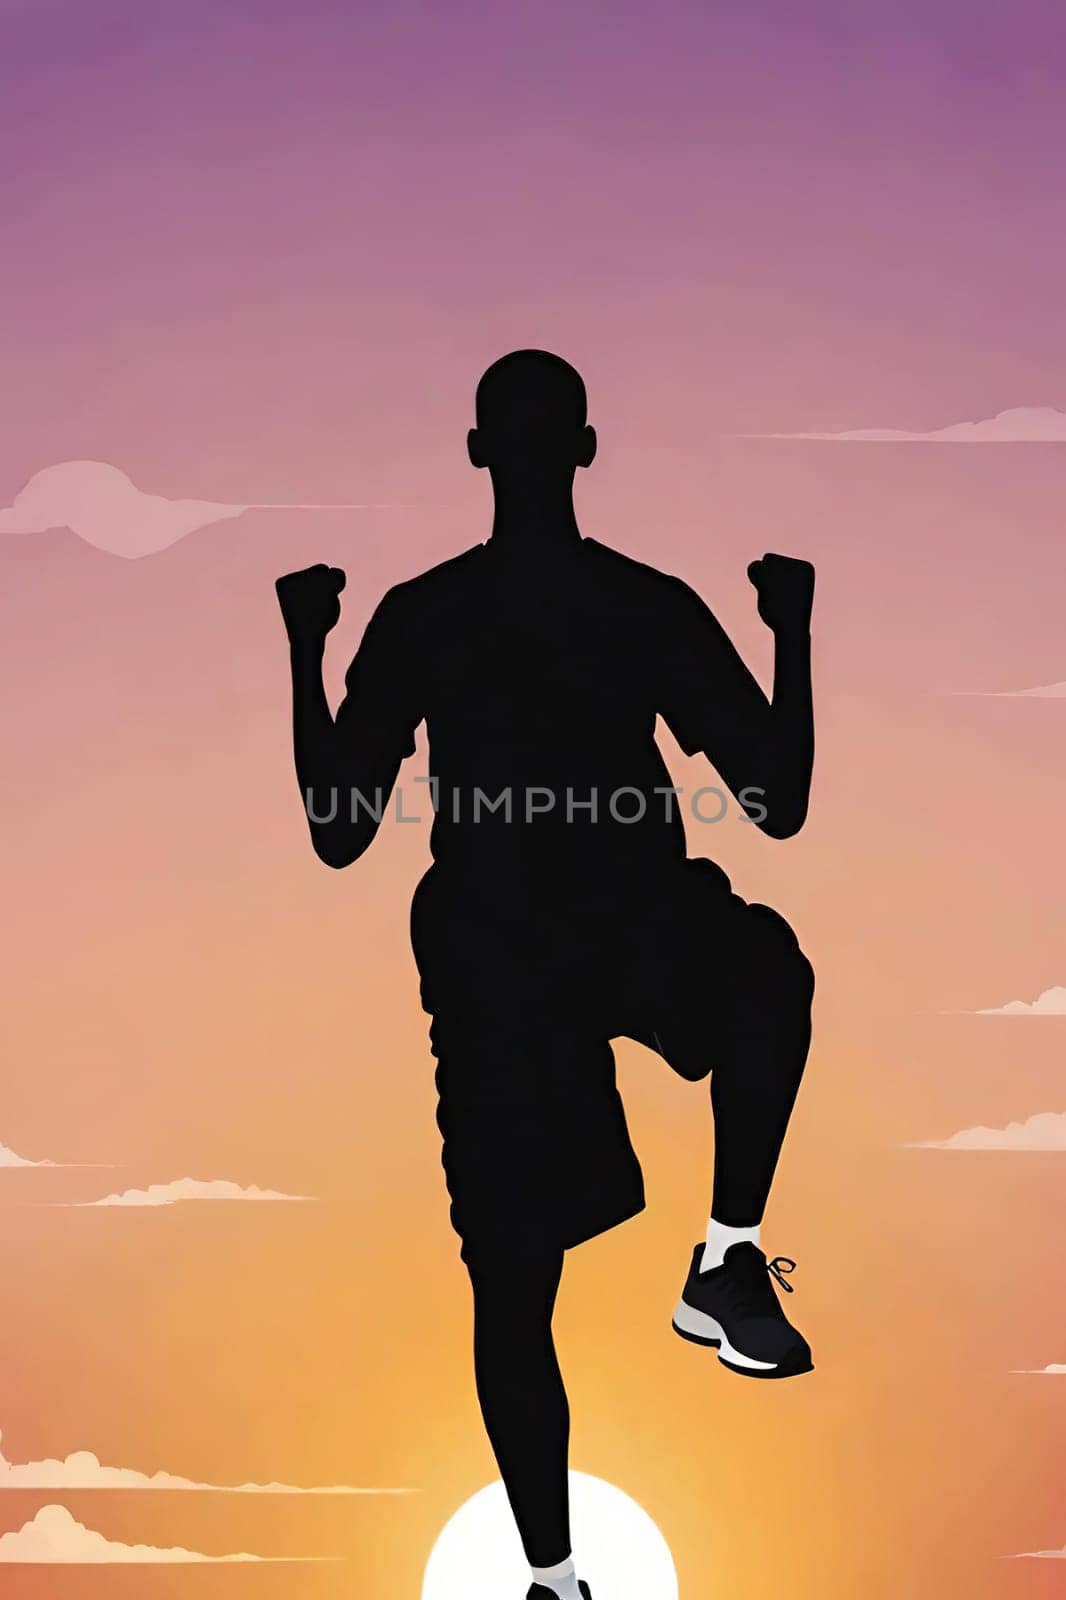 Running man silhouette on sunset background. by yilmazsavaskandag